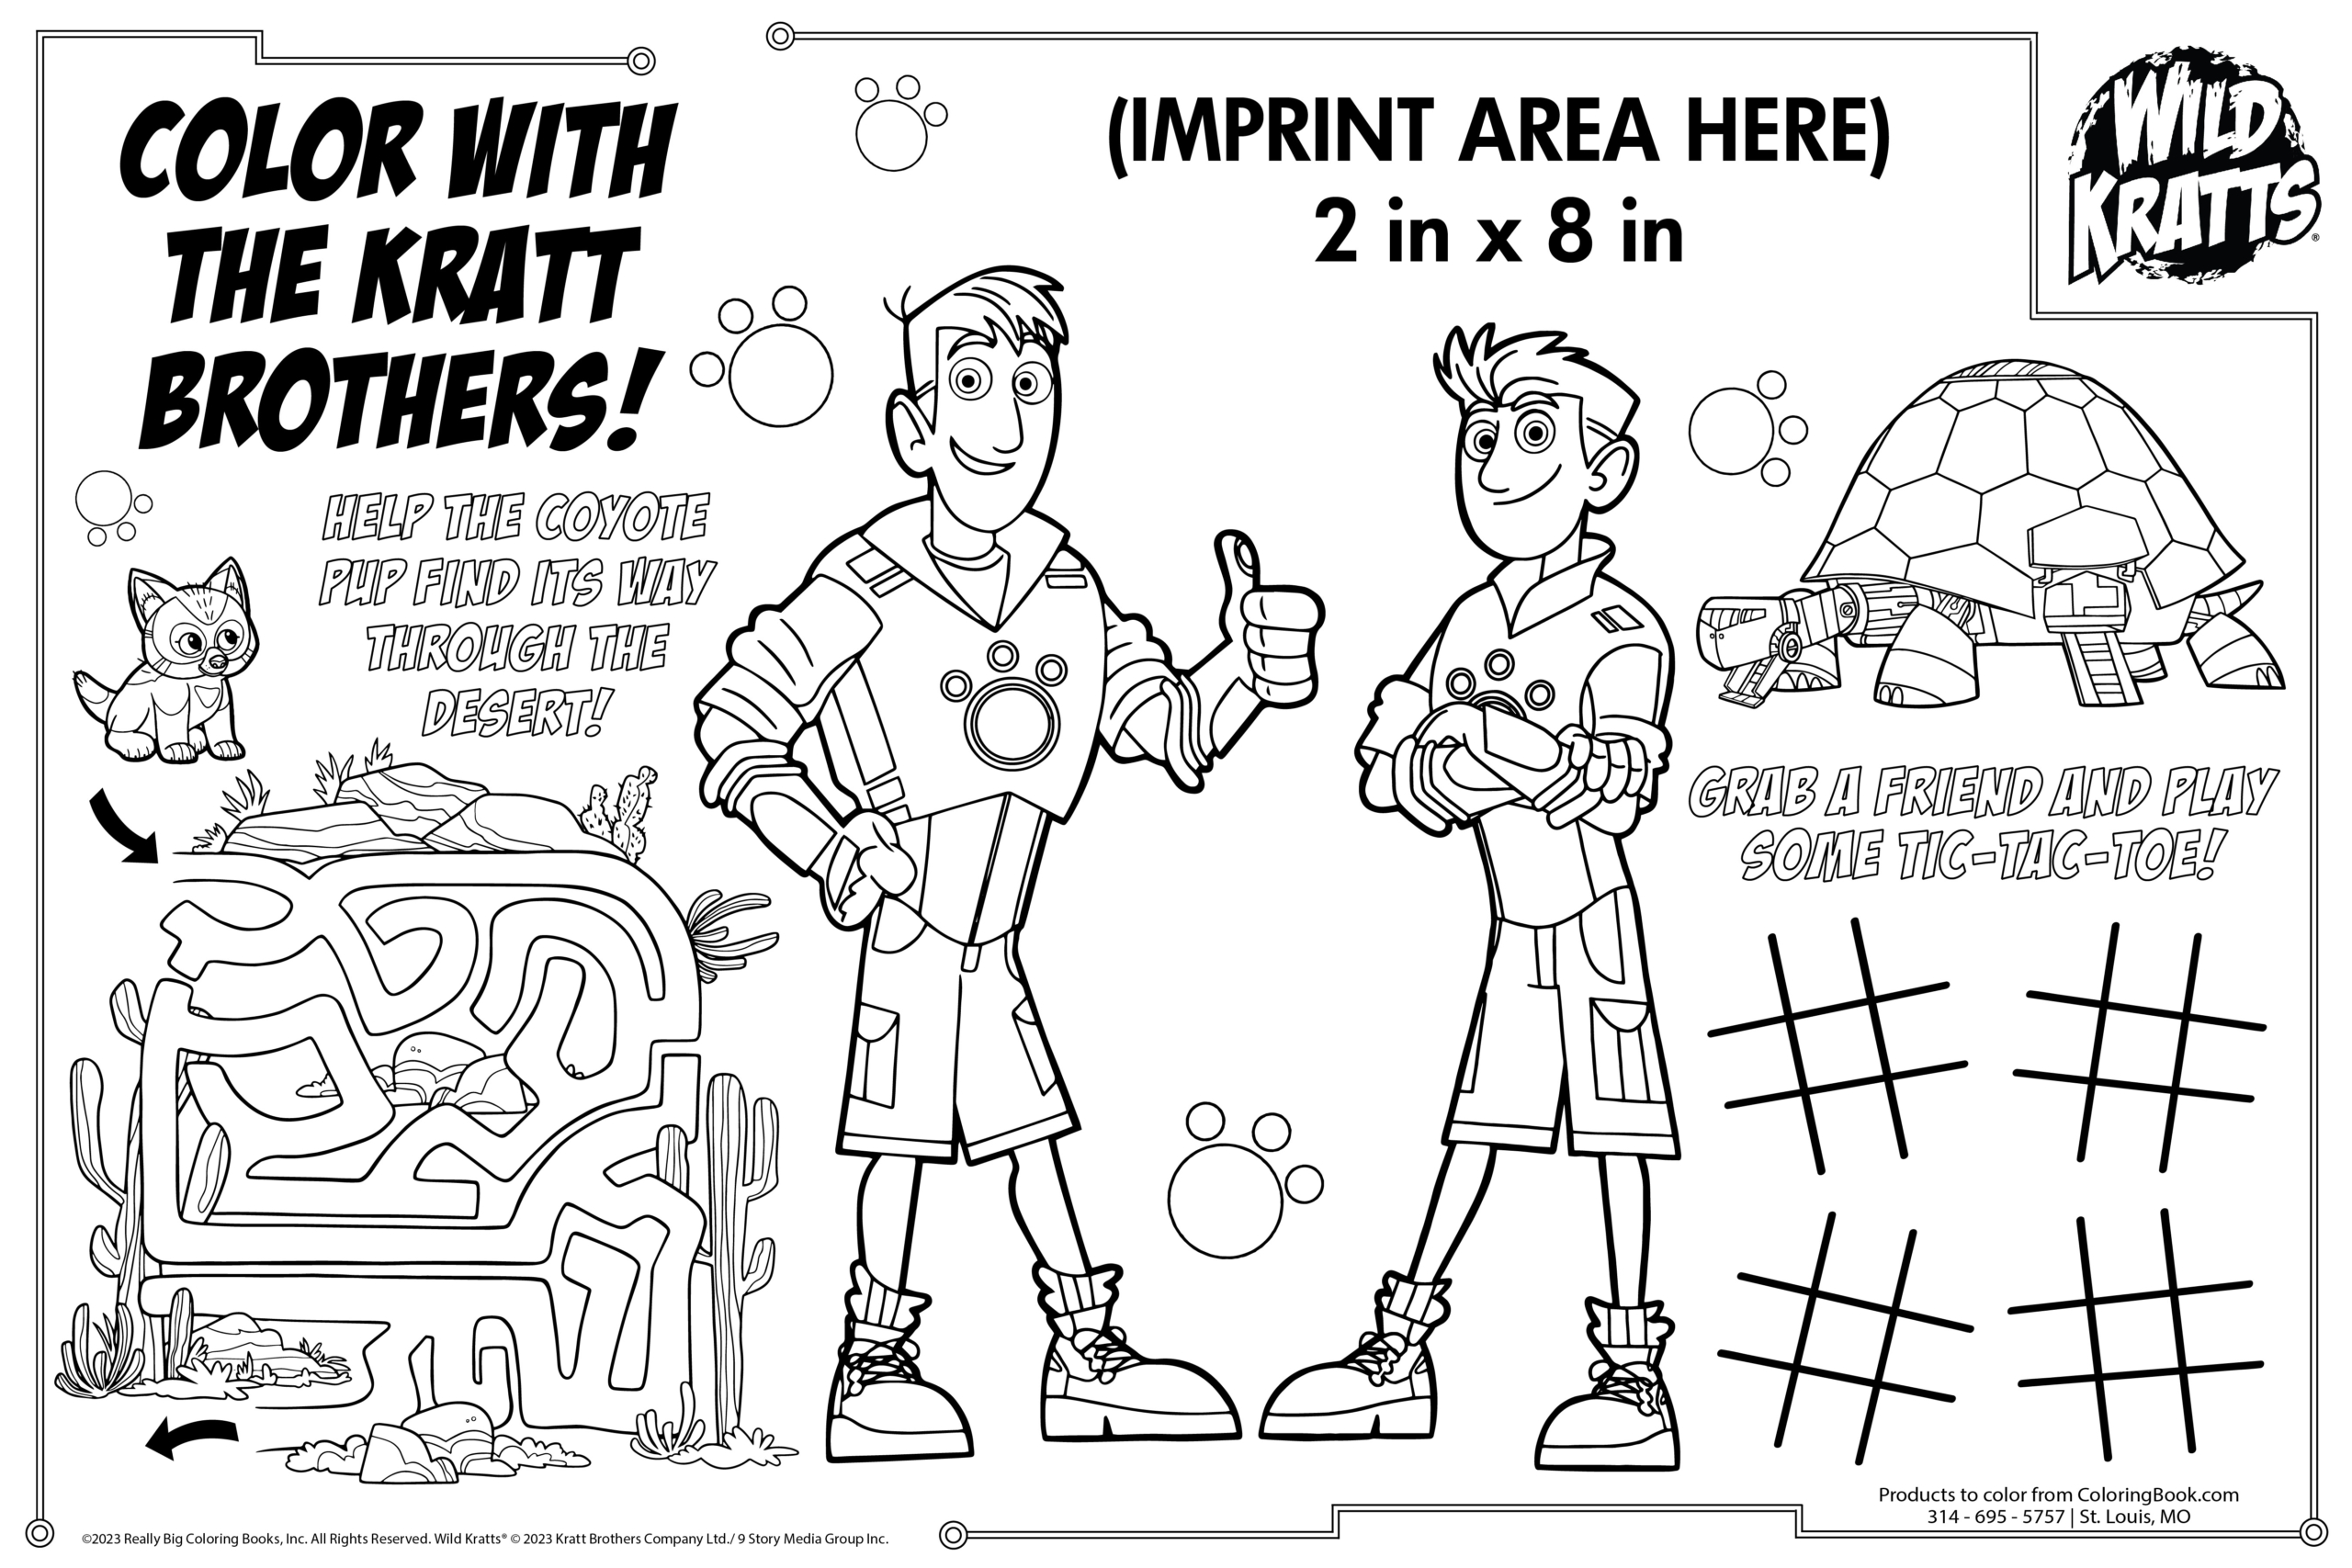 Wild Kratts Imprint Coloring Placemat: Chris and Martin Kratt